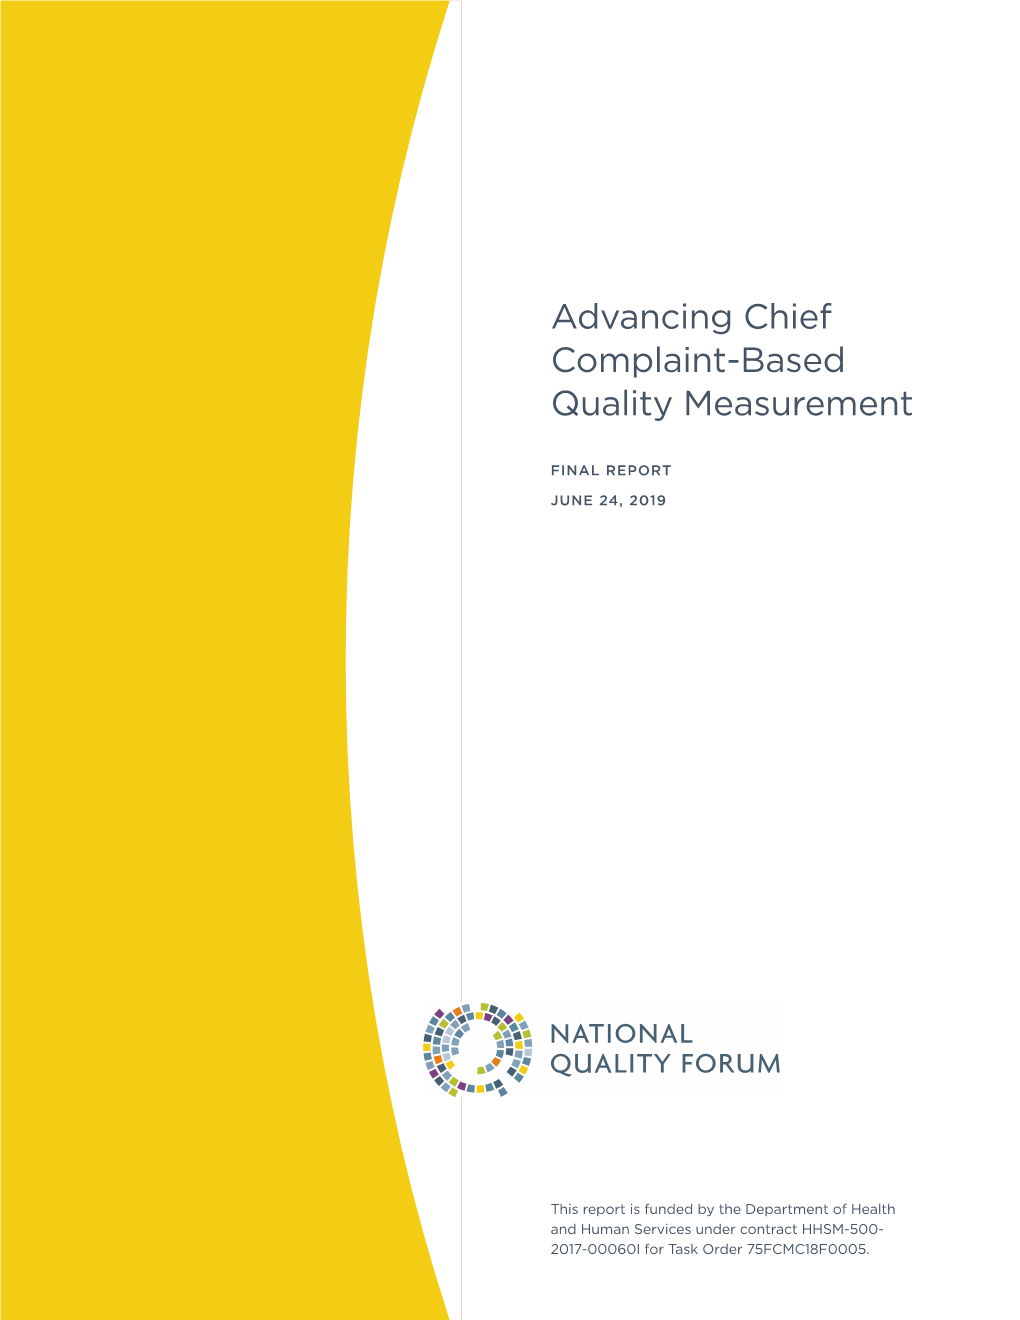 Advancing Chief Complaint-Based Quality Measurement